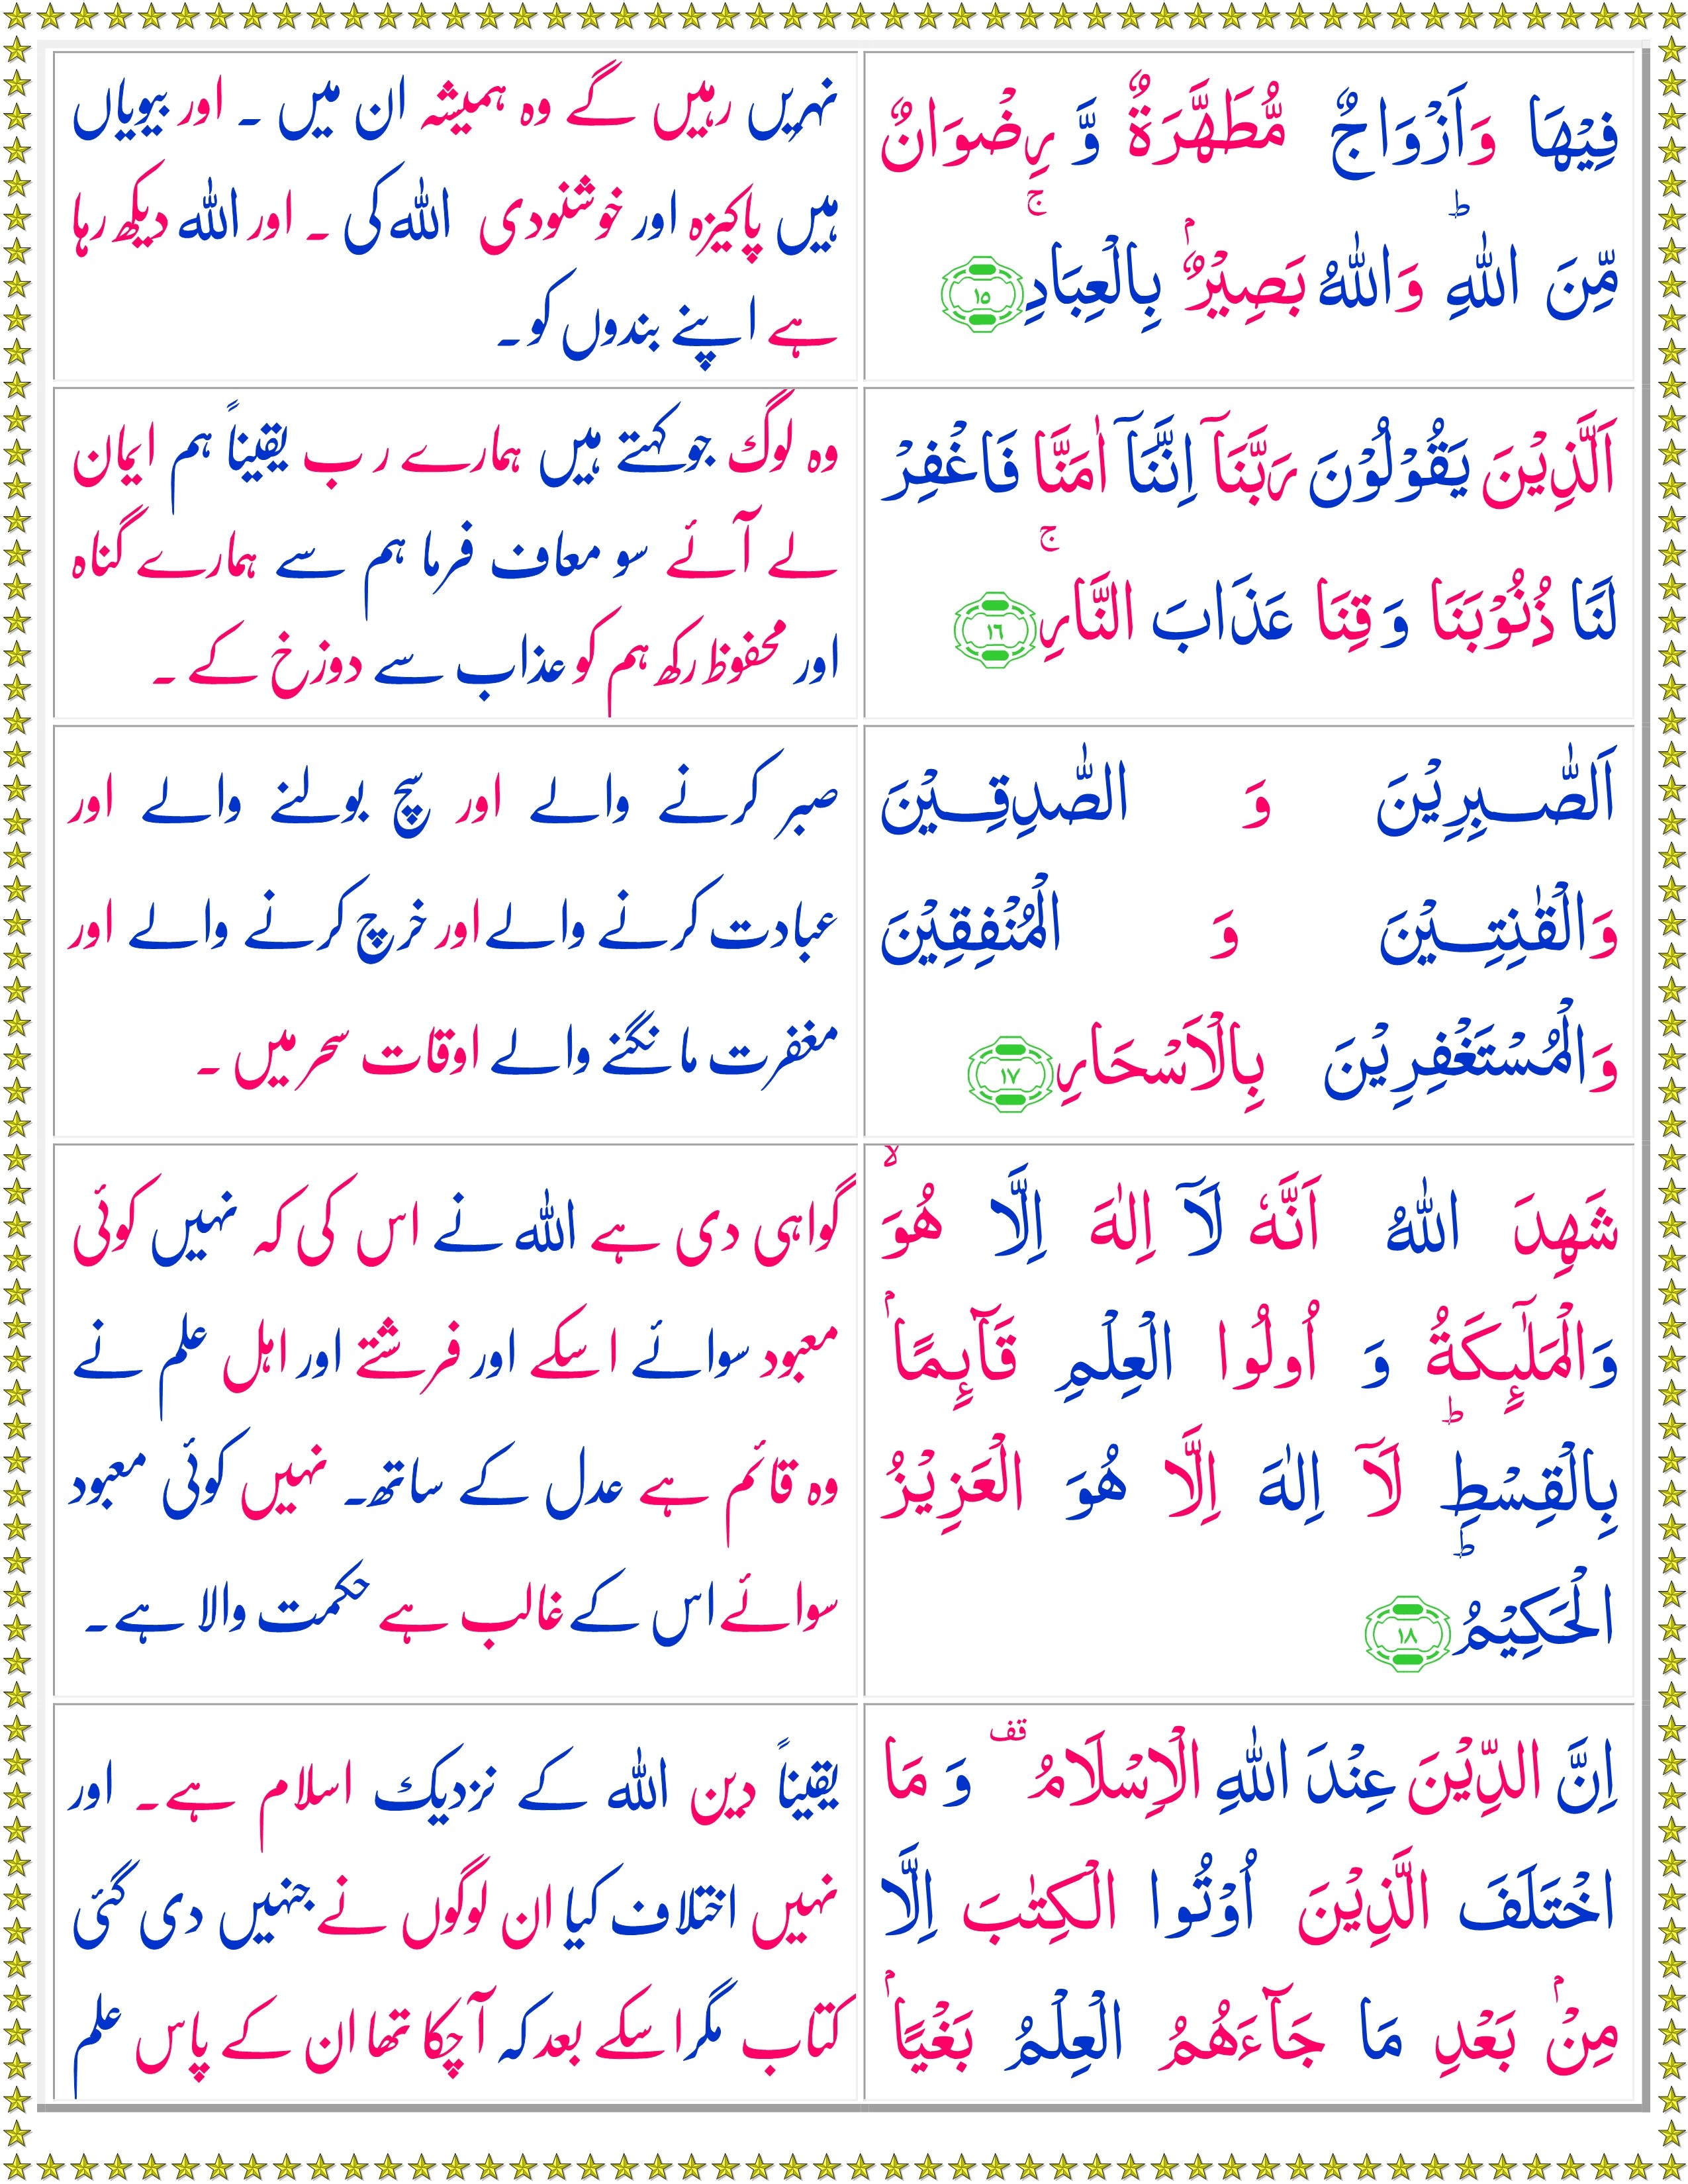 Surah Al Imran Ayat Tafseer Surah Al I Imran Arabic Text With Urdu